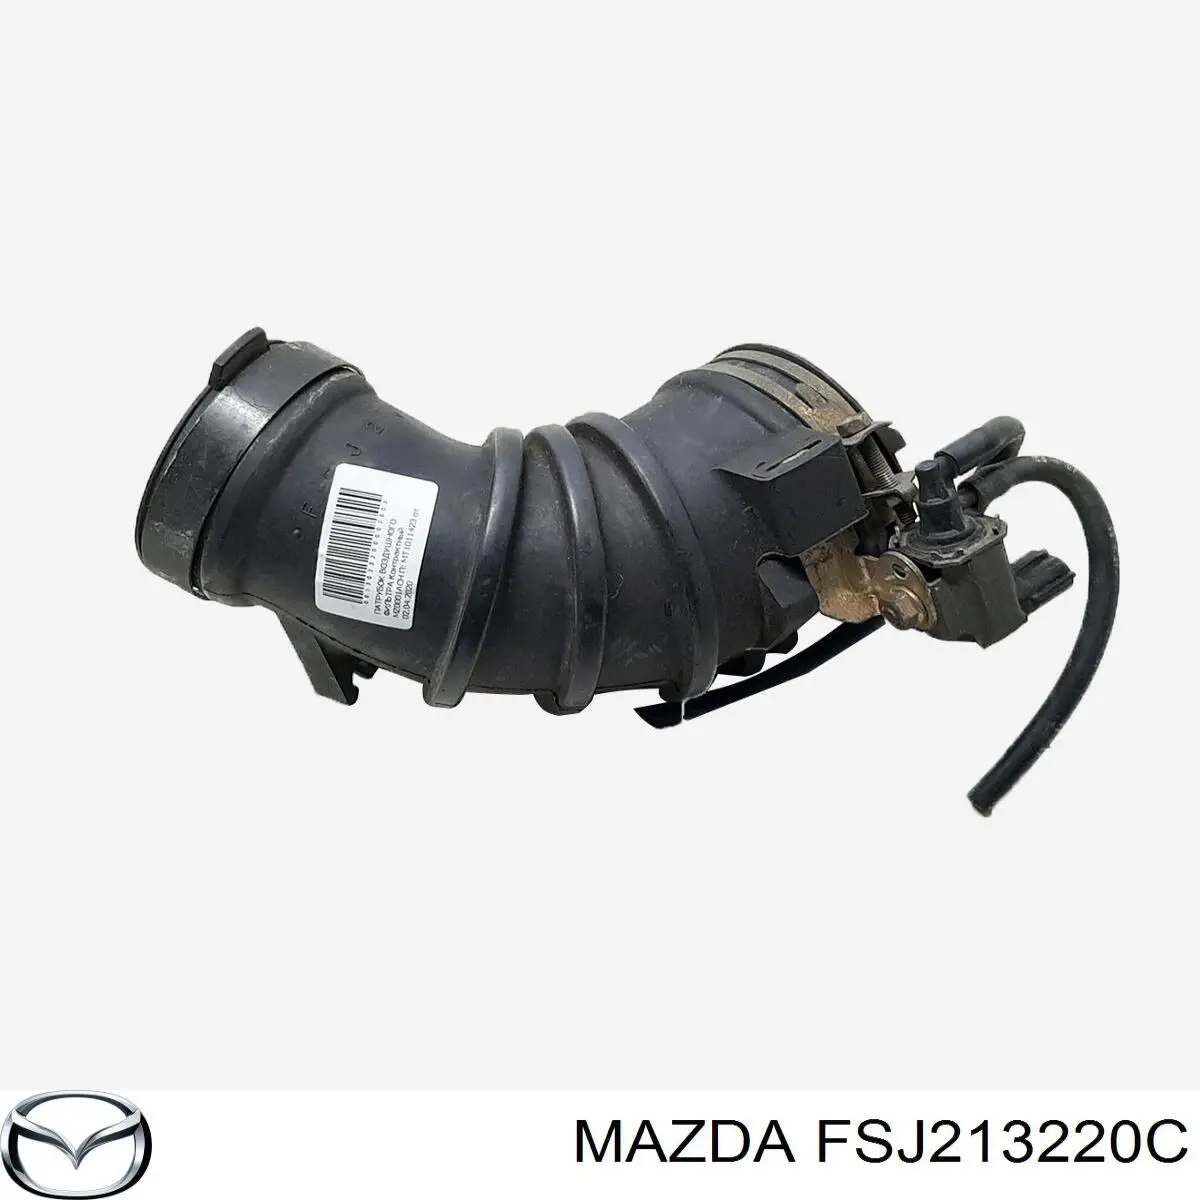 FSJ213220C Mazda tubo flexible de aspiración, cuerpo mariposa